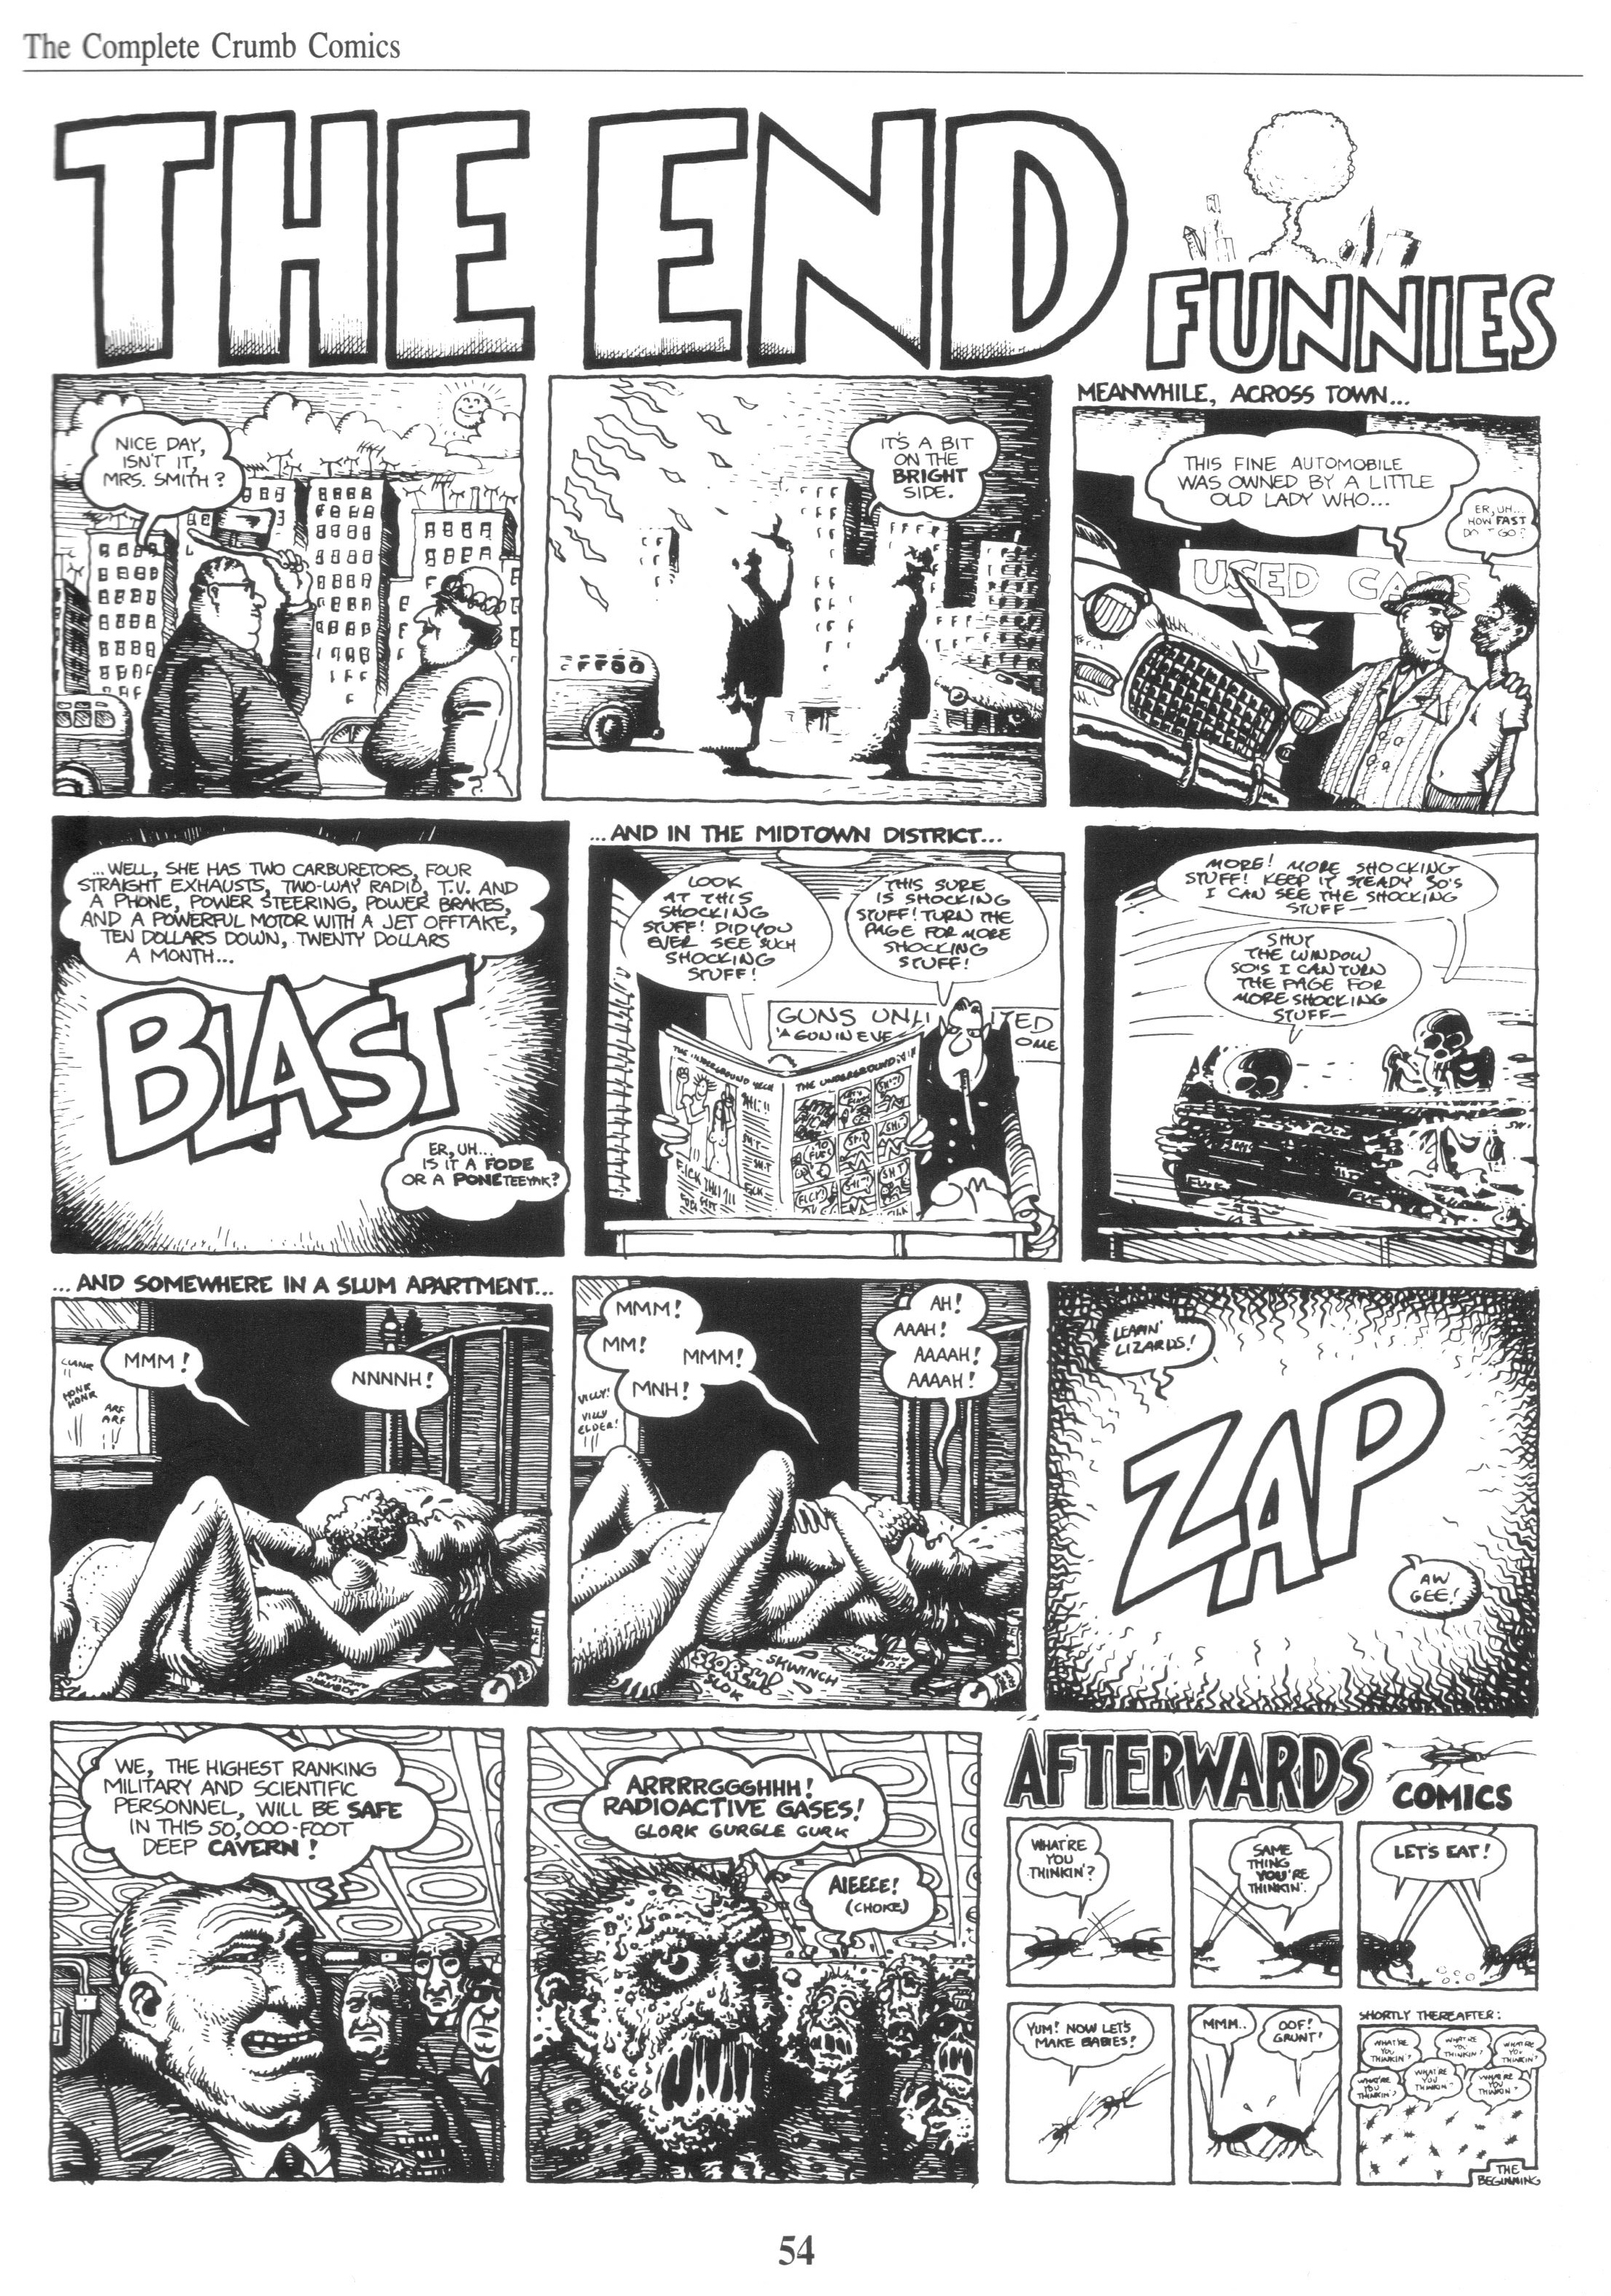 Read online The Complete Crumb Comics comic -  Issue # TPB 6 - 64